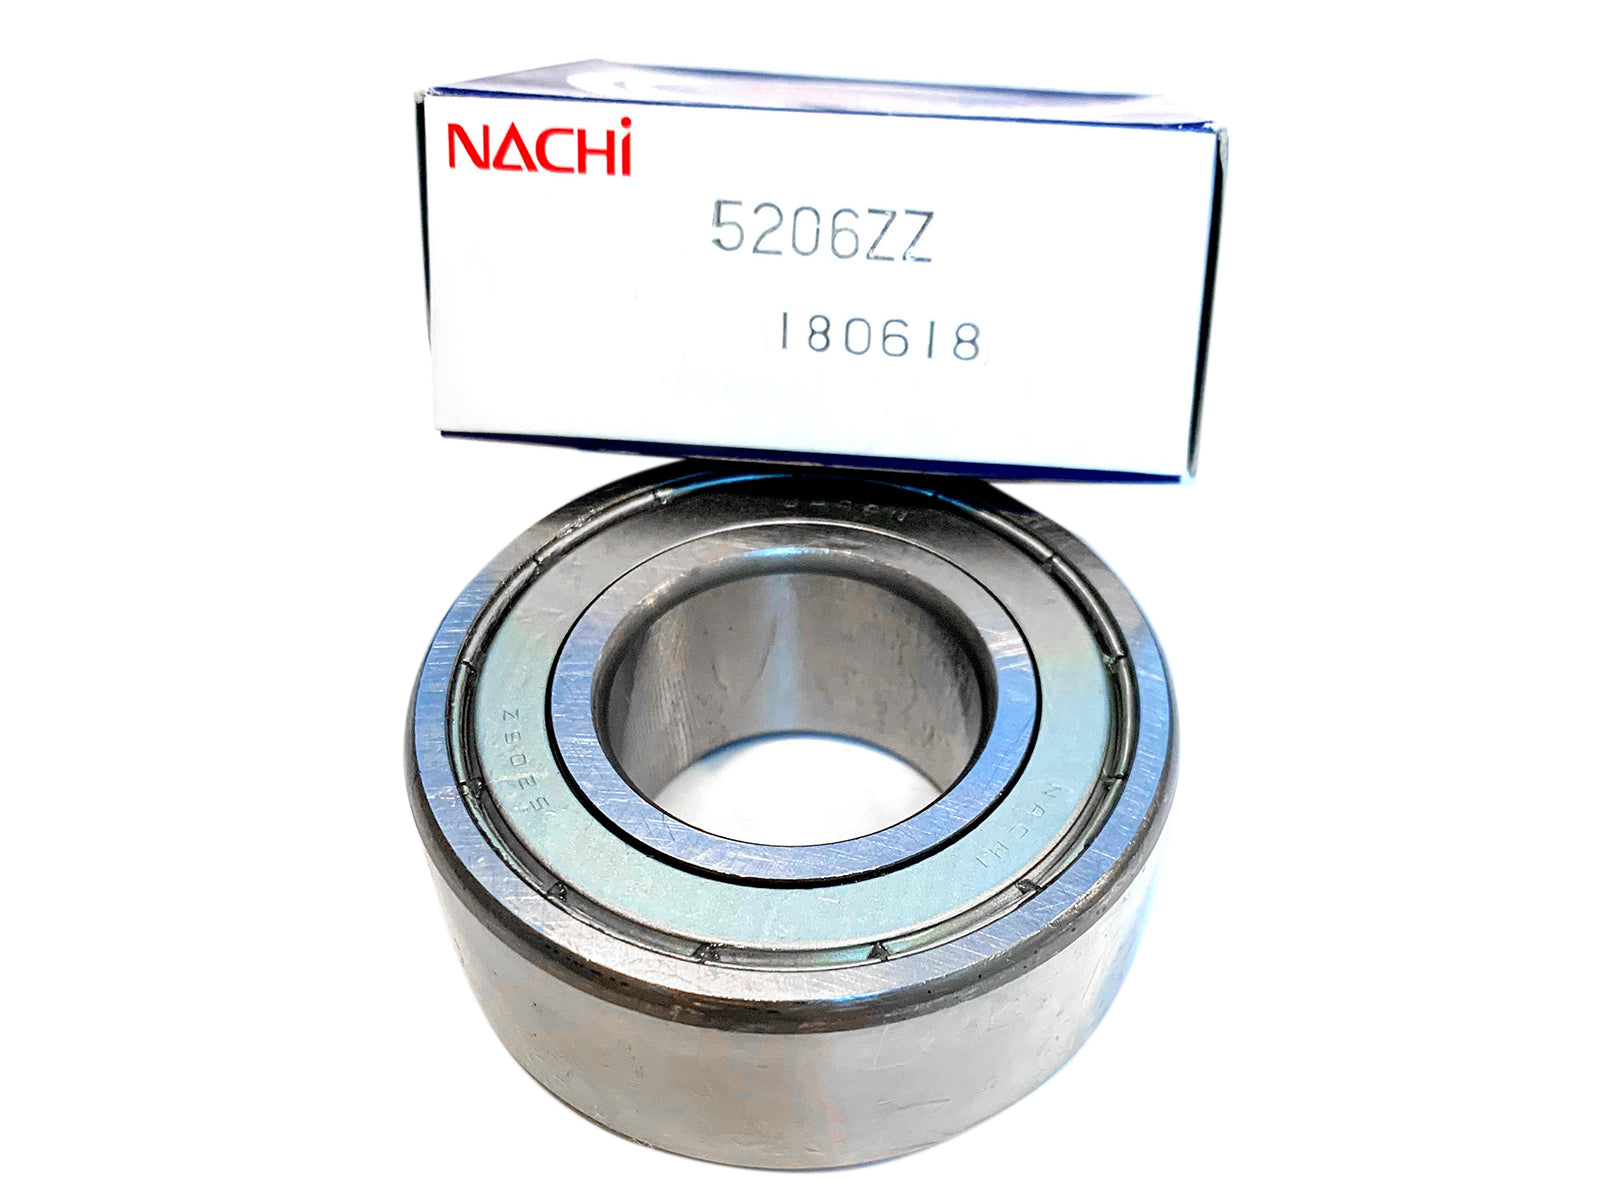 5206-ZZ NACHI Ball Bearing - ppdistributors